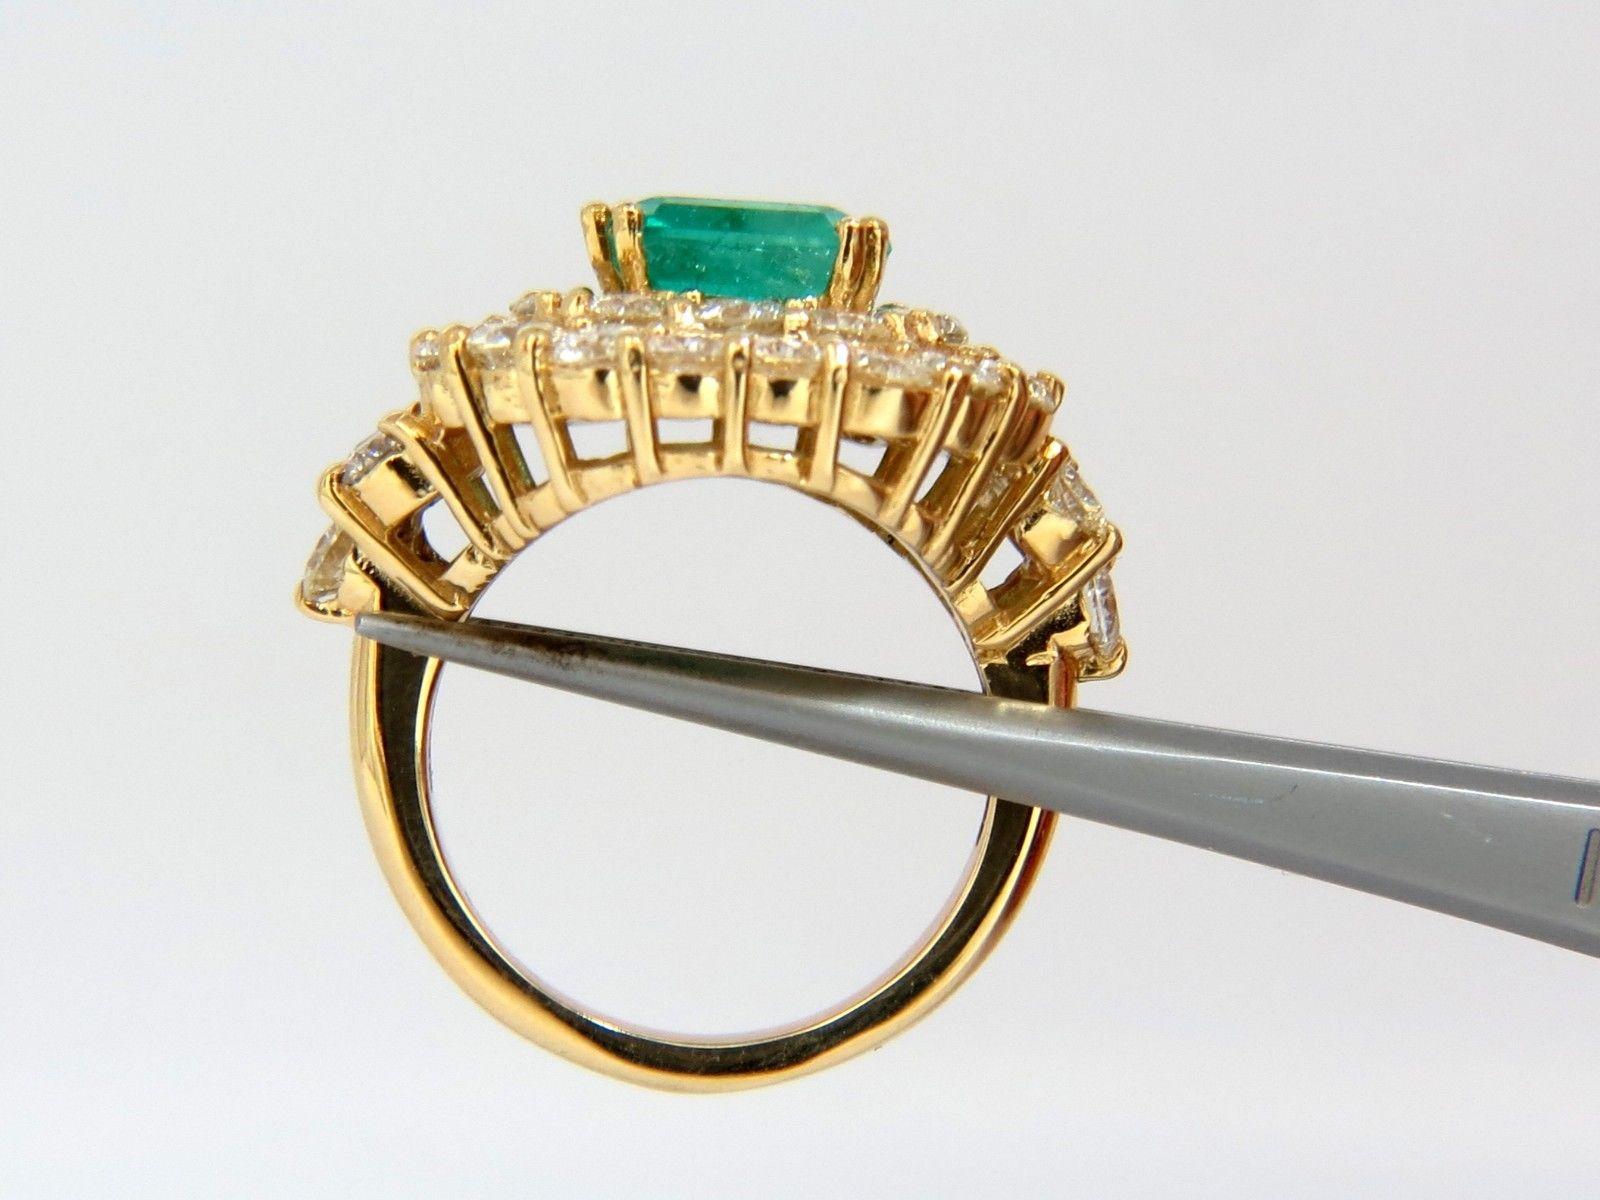 Emerald Cut GIA 7.51 Natural Colombia Bright Green Emerald Diamonds Ring 18 Karat For Sale